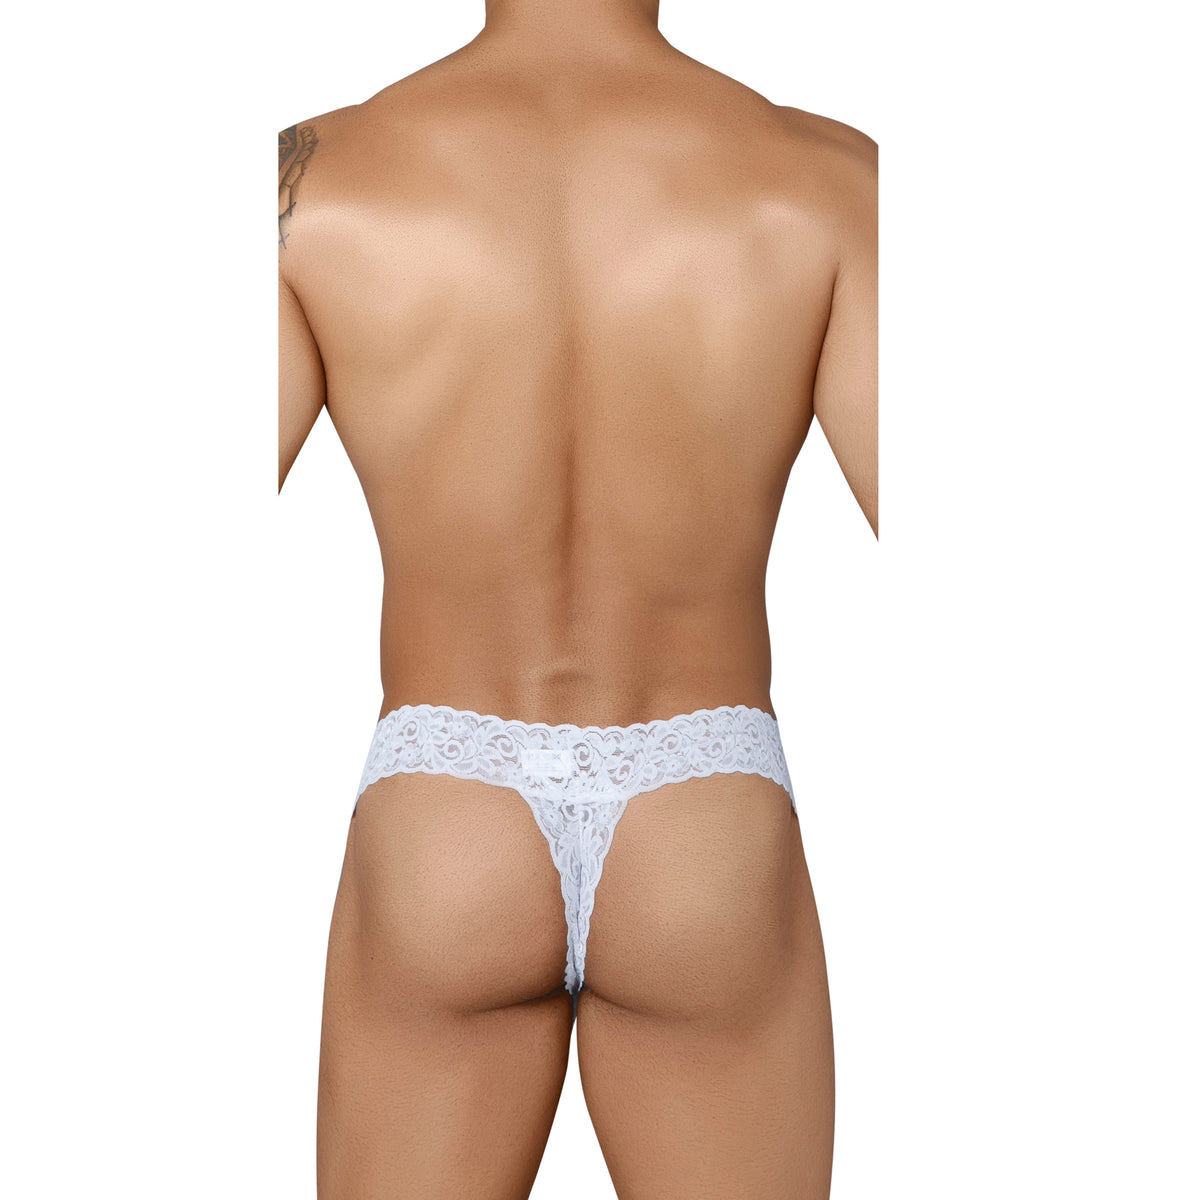 Mens Lace Underwear Nylon Briefs G-String White Thongs